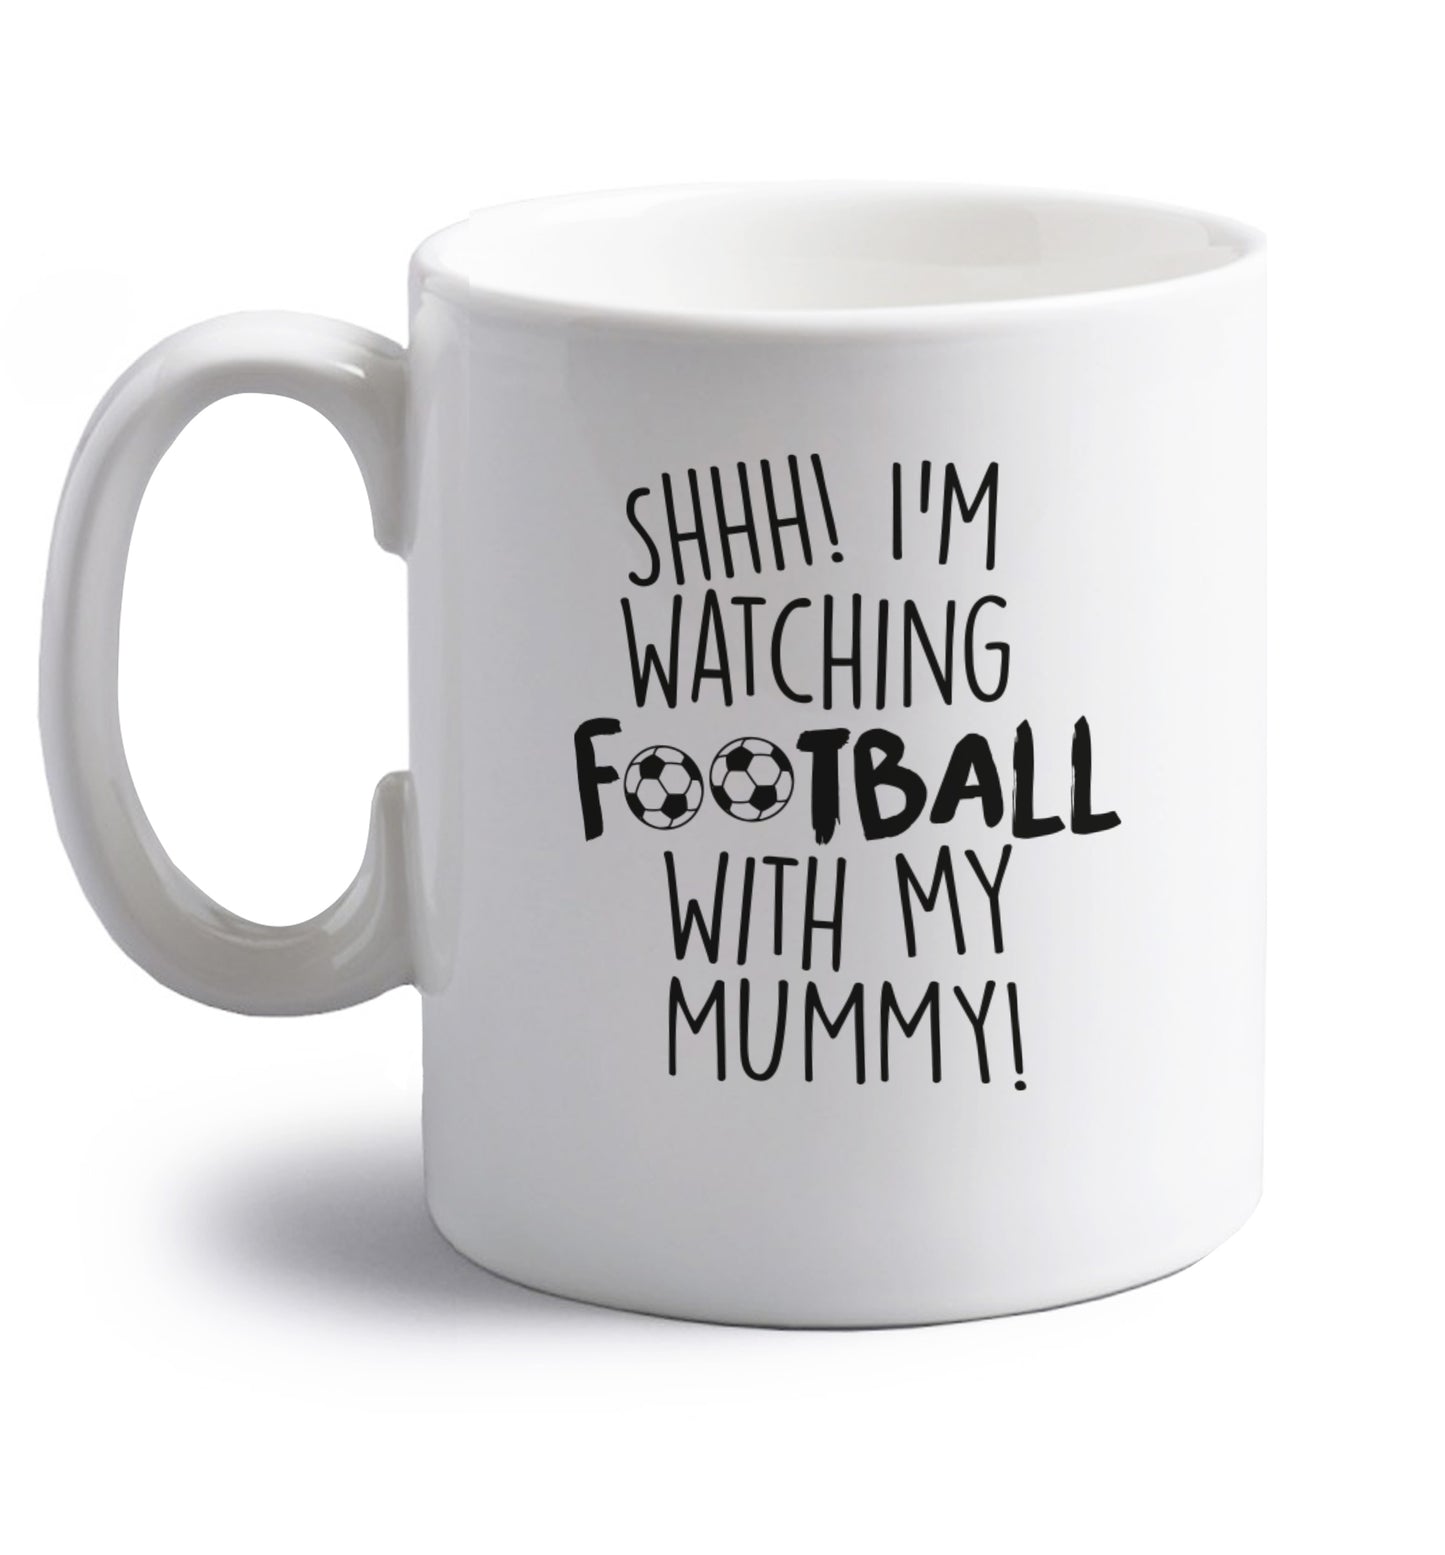 Shhh I'm watching football with my mummy right handed white ceramic mug 